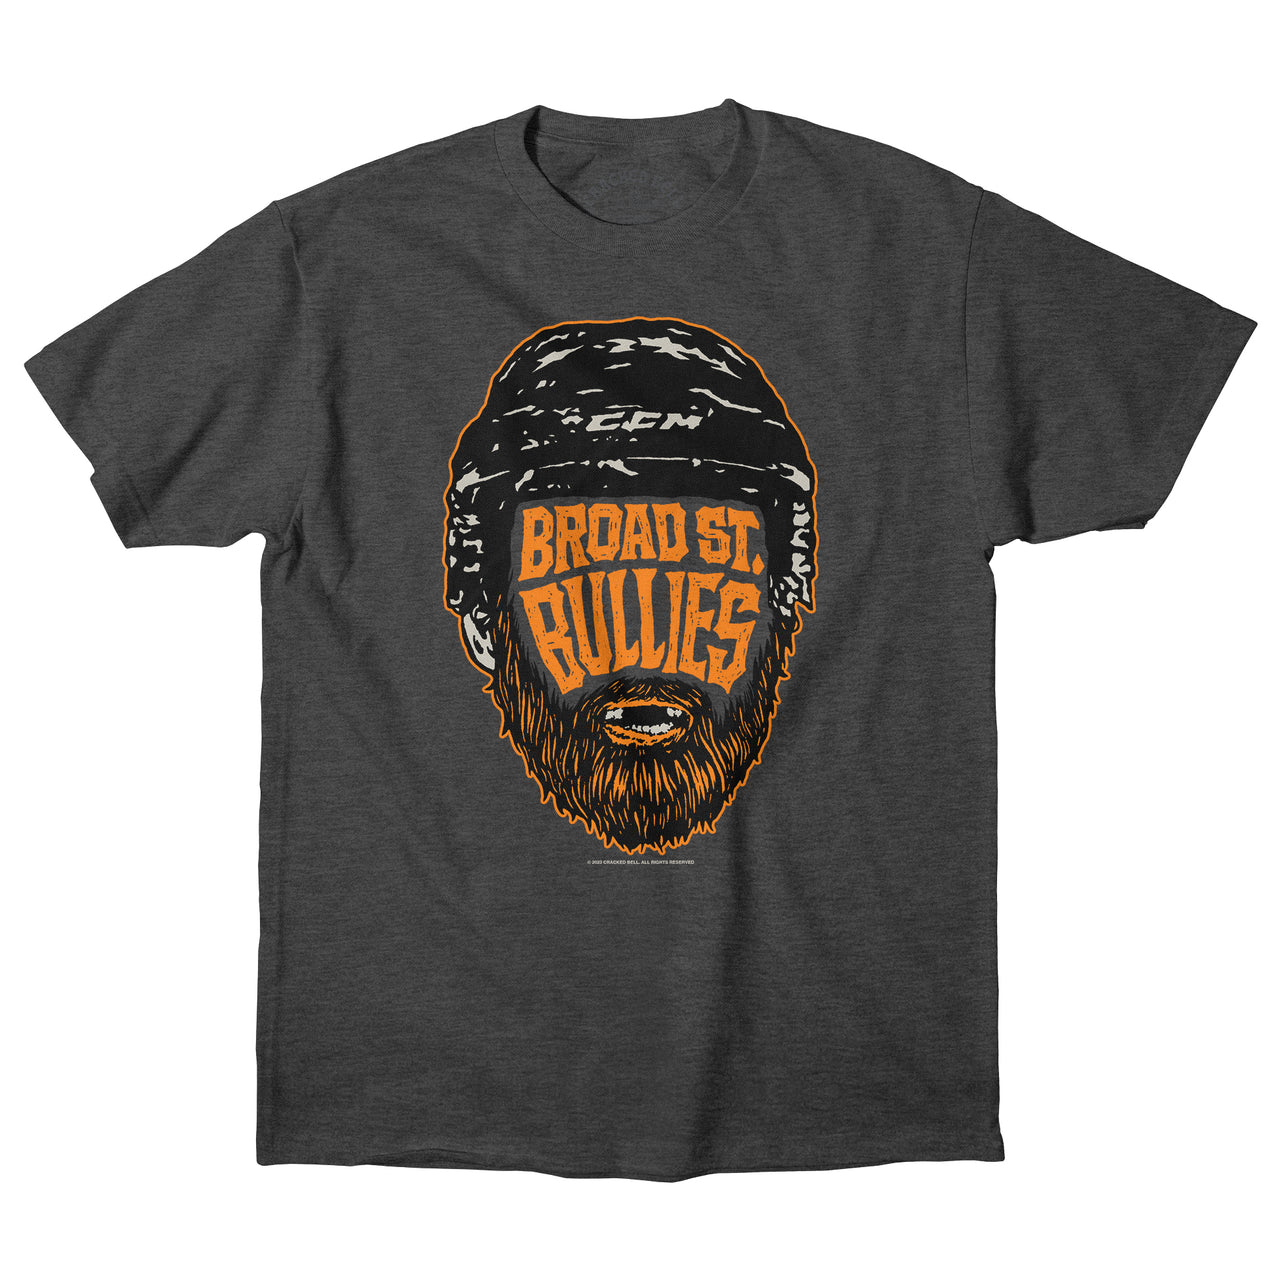 "Bullies" Shirt